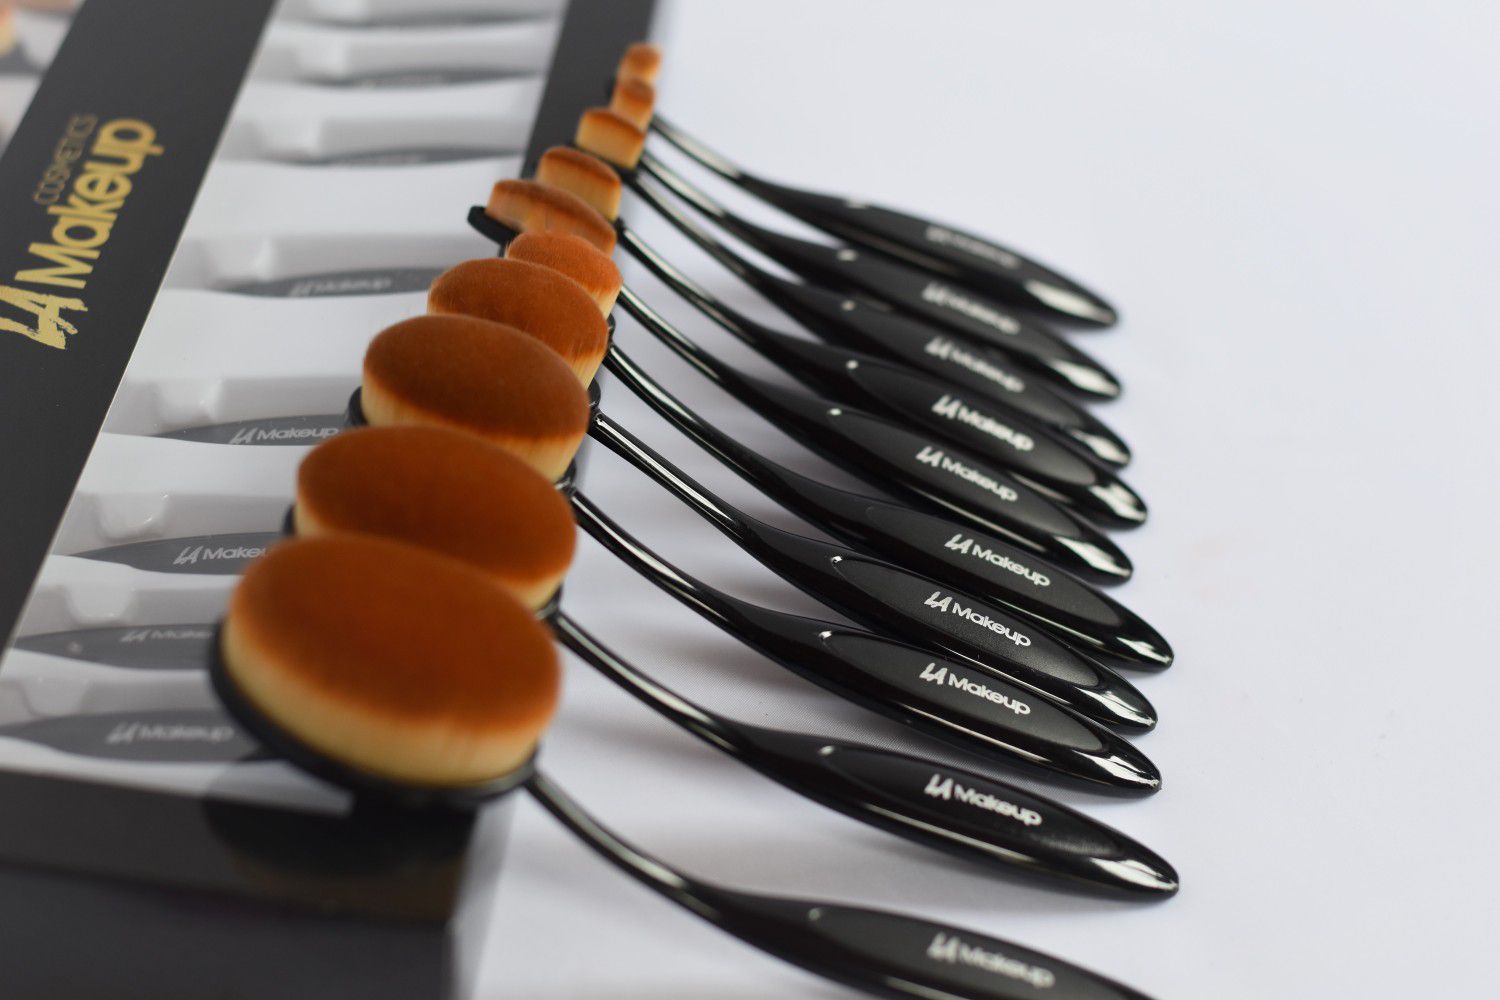 new. 10 pcs oval makeup brush set